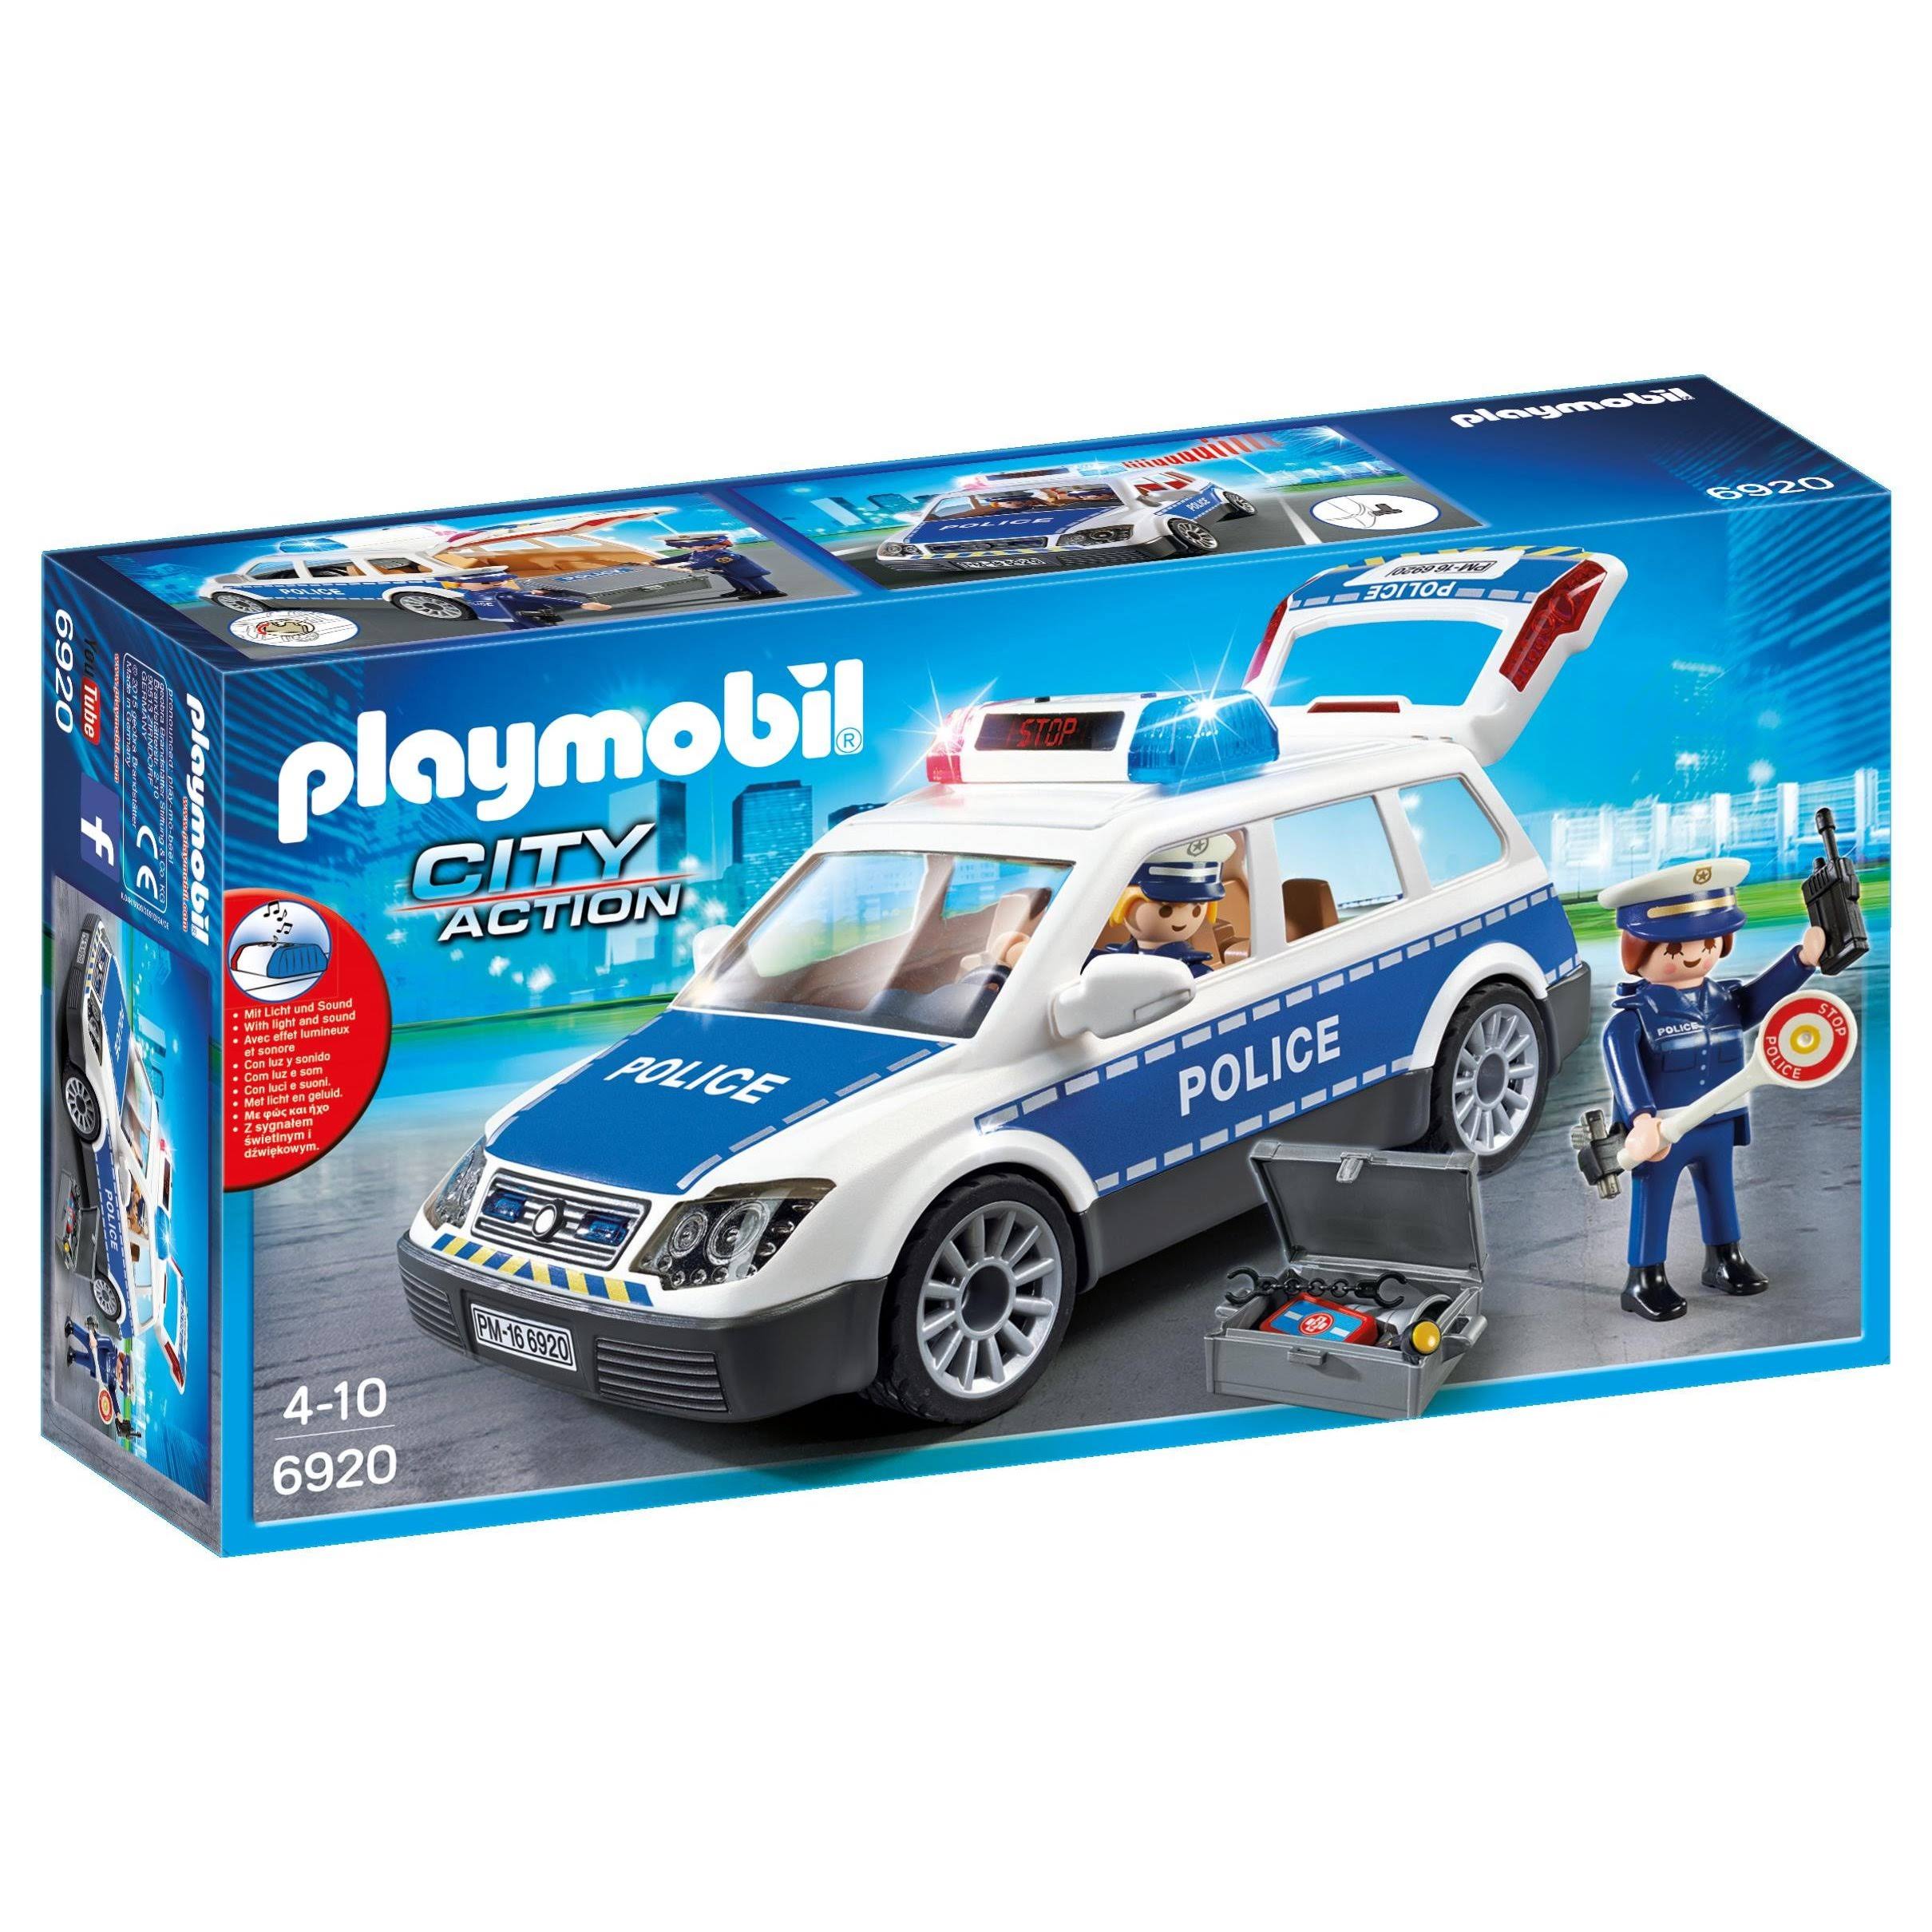 Playmobil Police Car